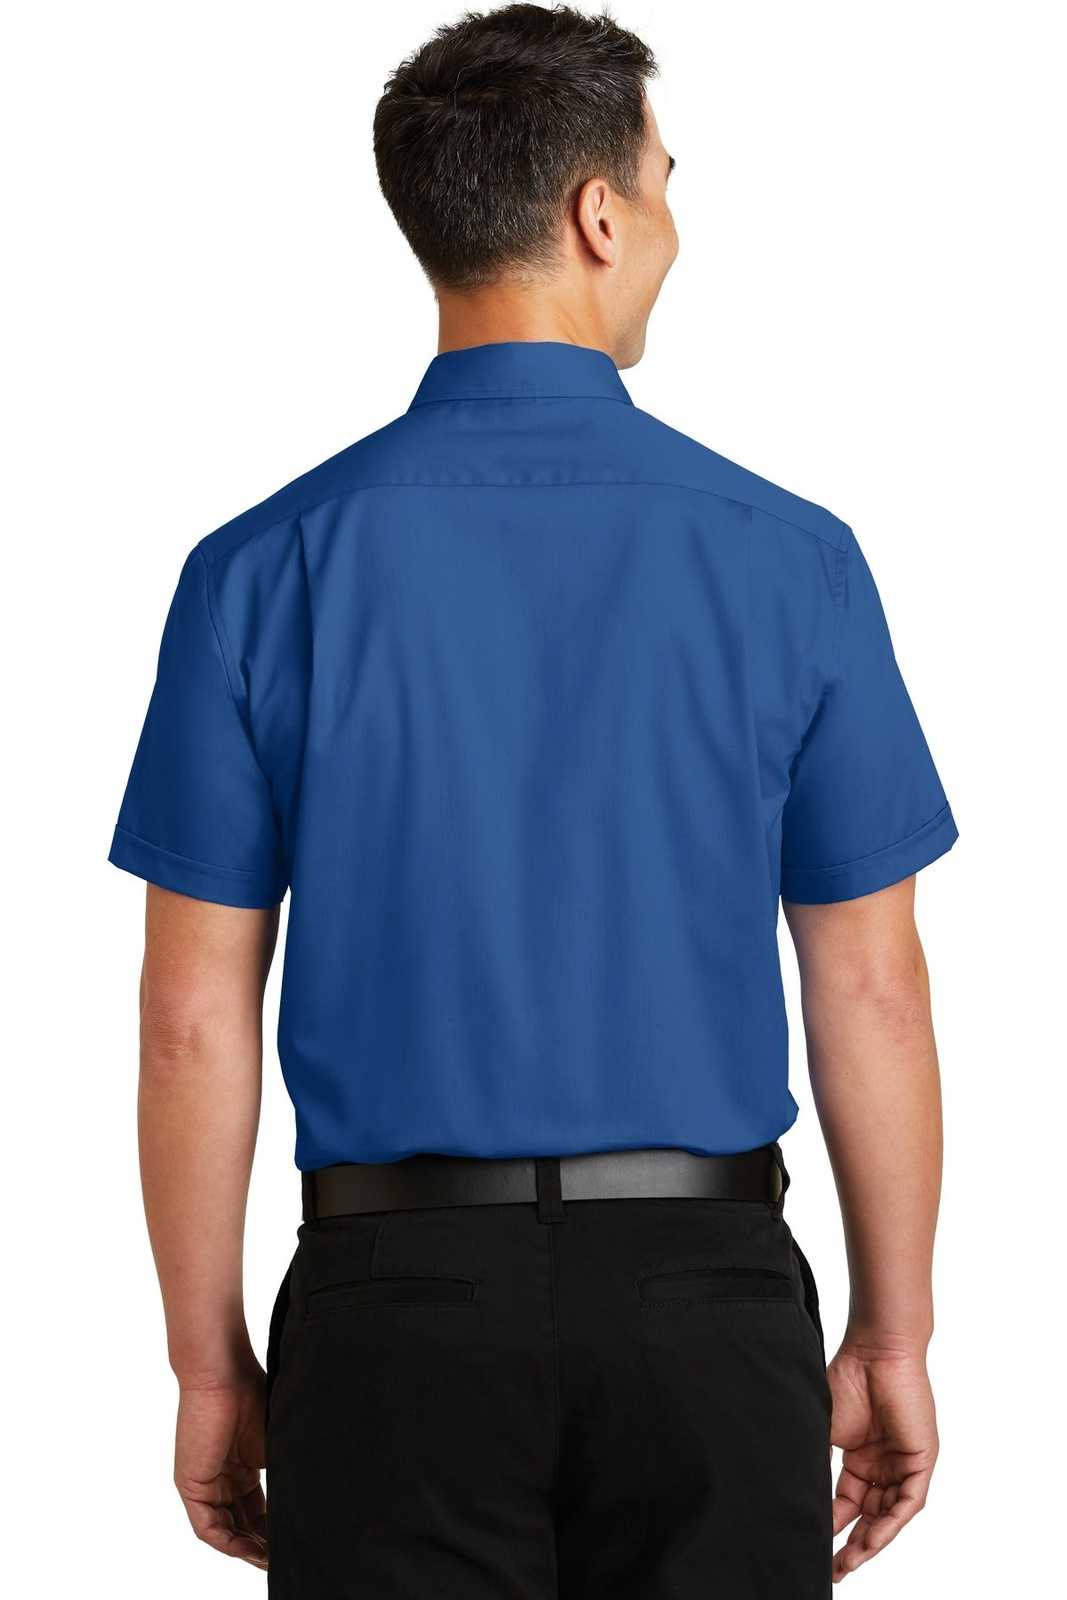 Port Authority S664 Short Sleeve Superpro Twill Shirt - True Blue - HIT a Double - 2